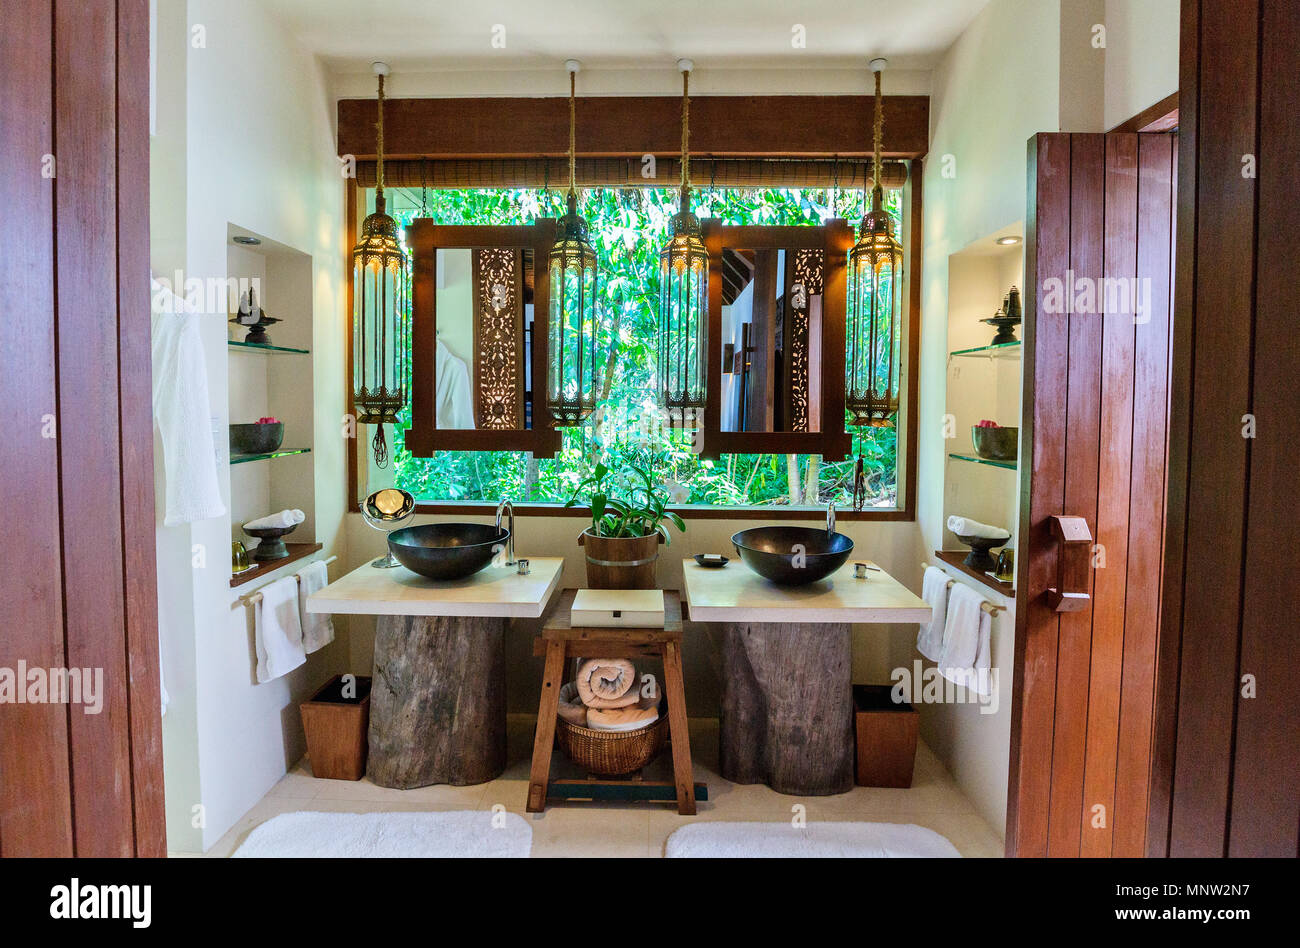 Tropical bathroom interior in a luxury resort Stock Photo